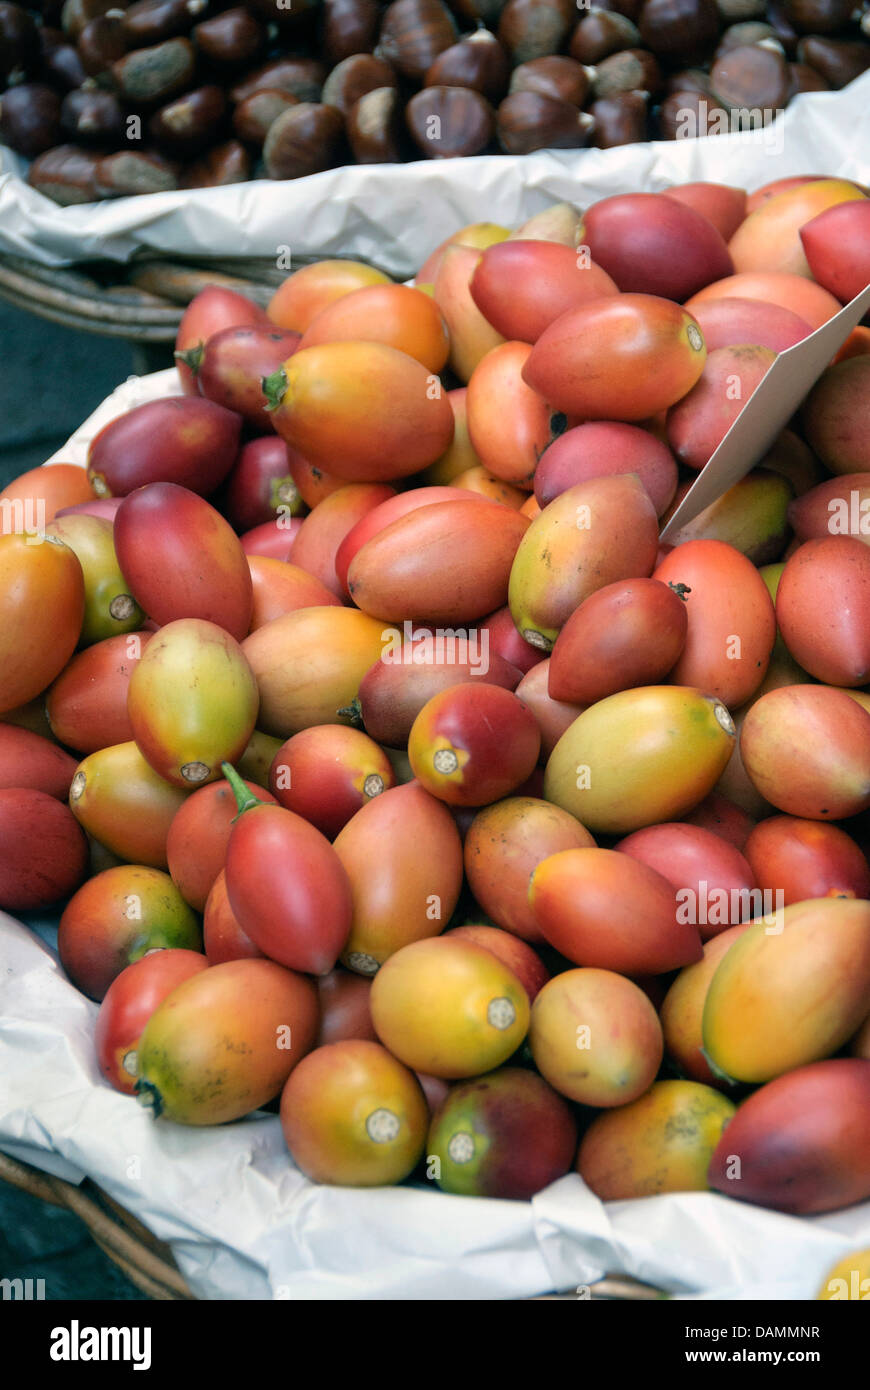 Tree tomato, Tamarillo, Tomate de �rbol (Cyphomandra betacea, Cyphomandra crassicaulis), tree tomatoes in a dish Stock Photo